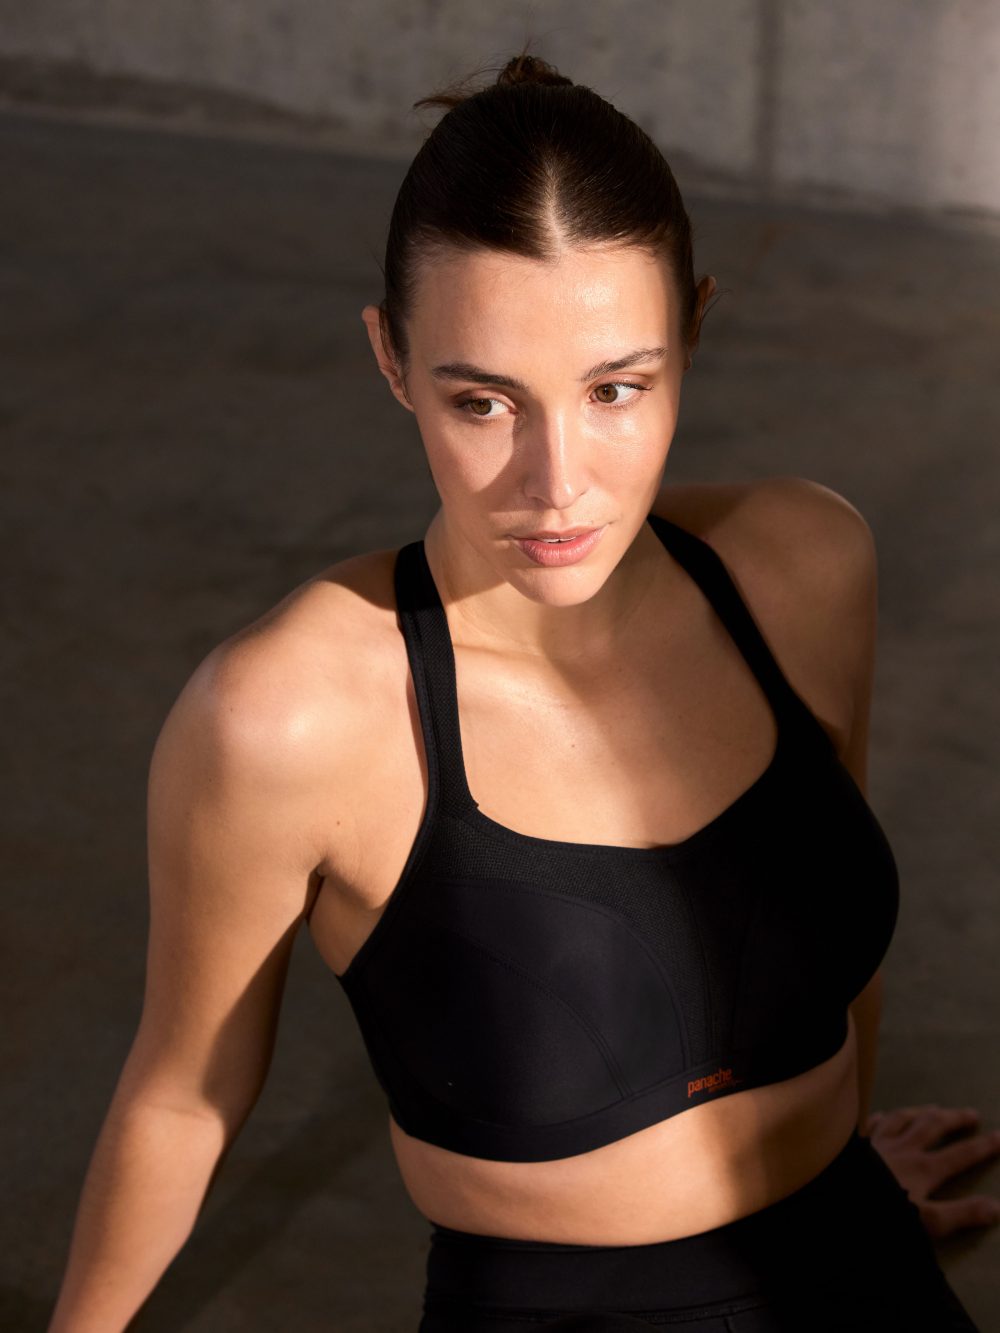 Panache Wired Sports Bra - Black worn by model, lifestyle image